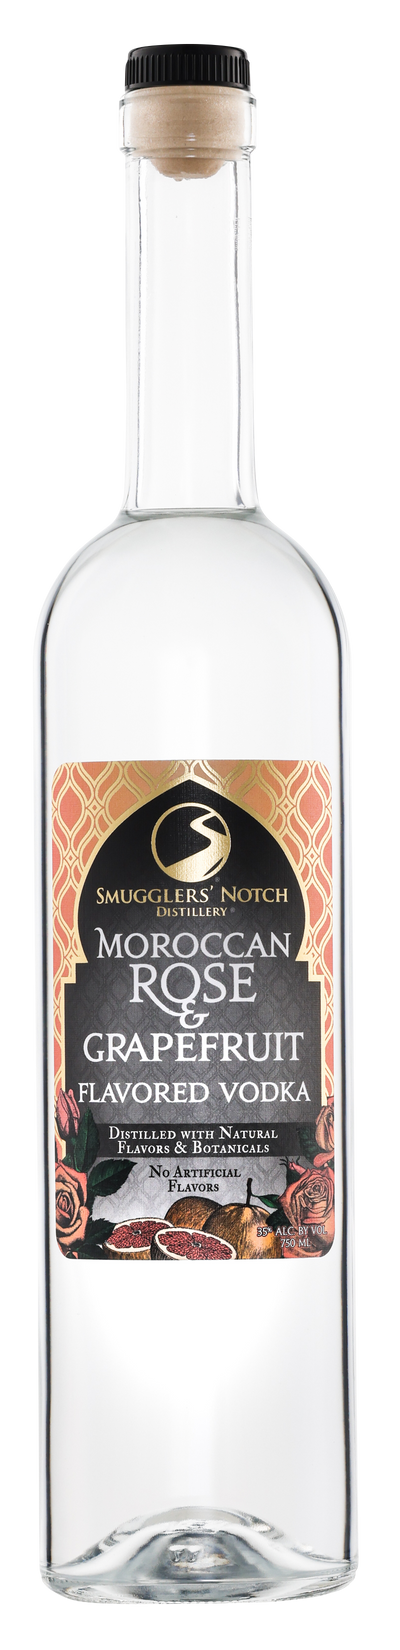 Moroccan Rose & Grapefruit Flavored Vodka